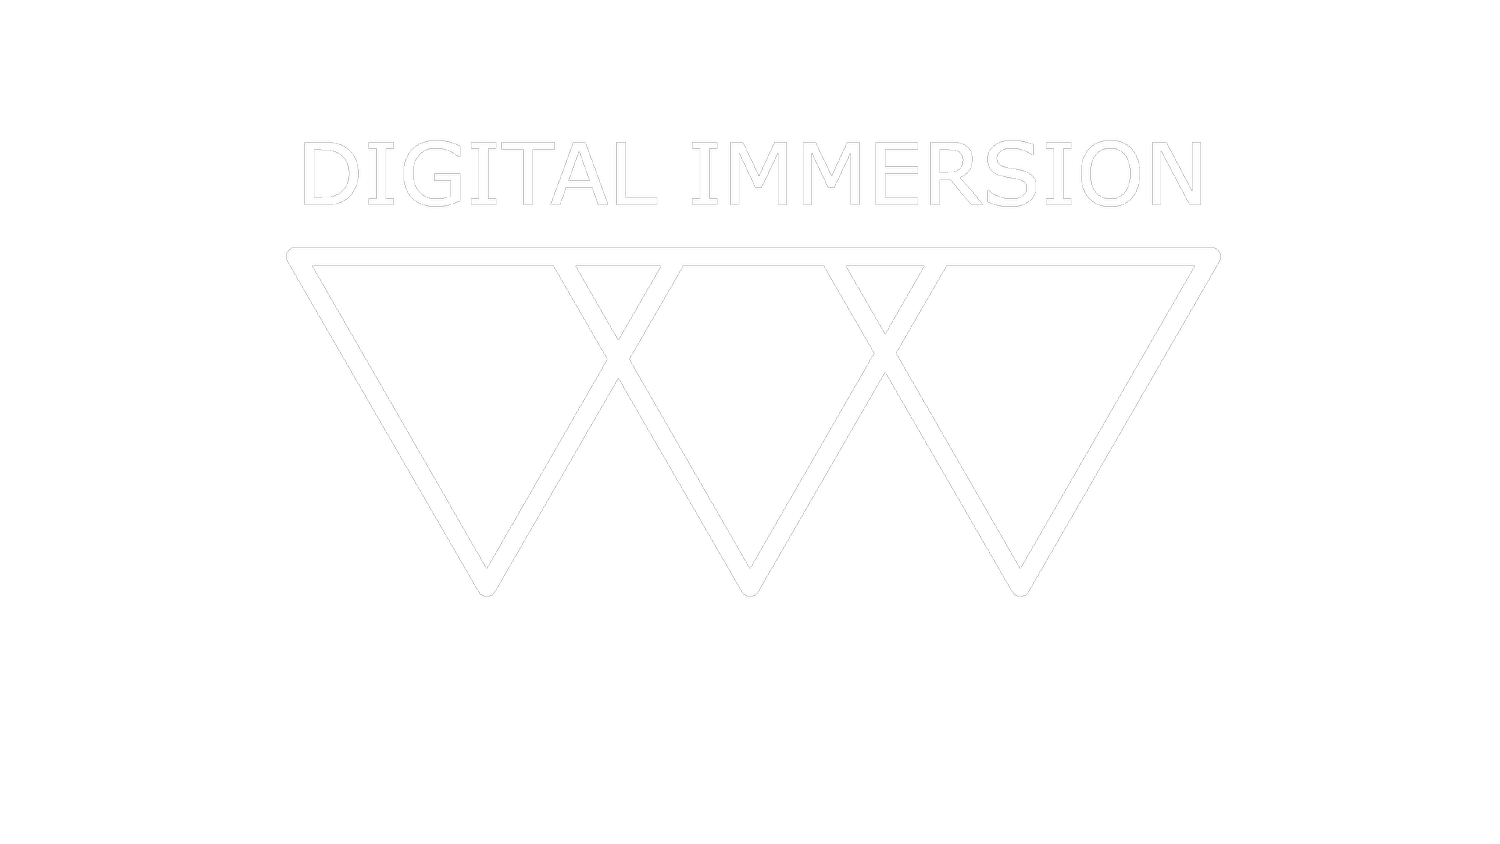 Digital Immersion